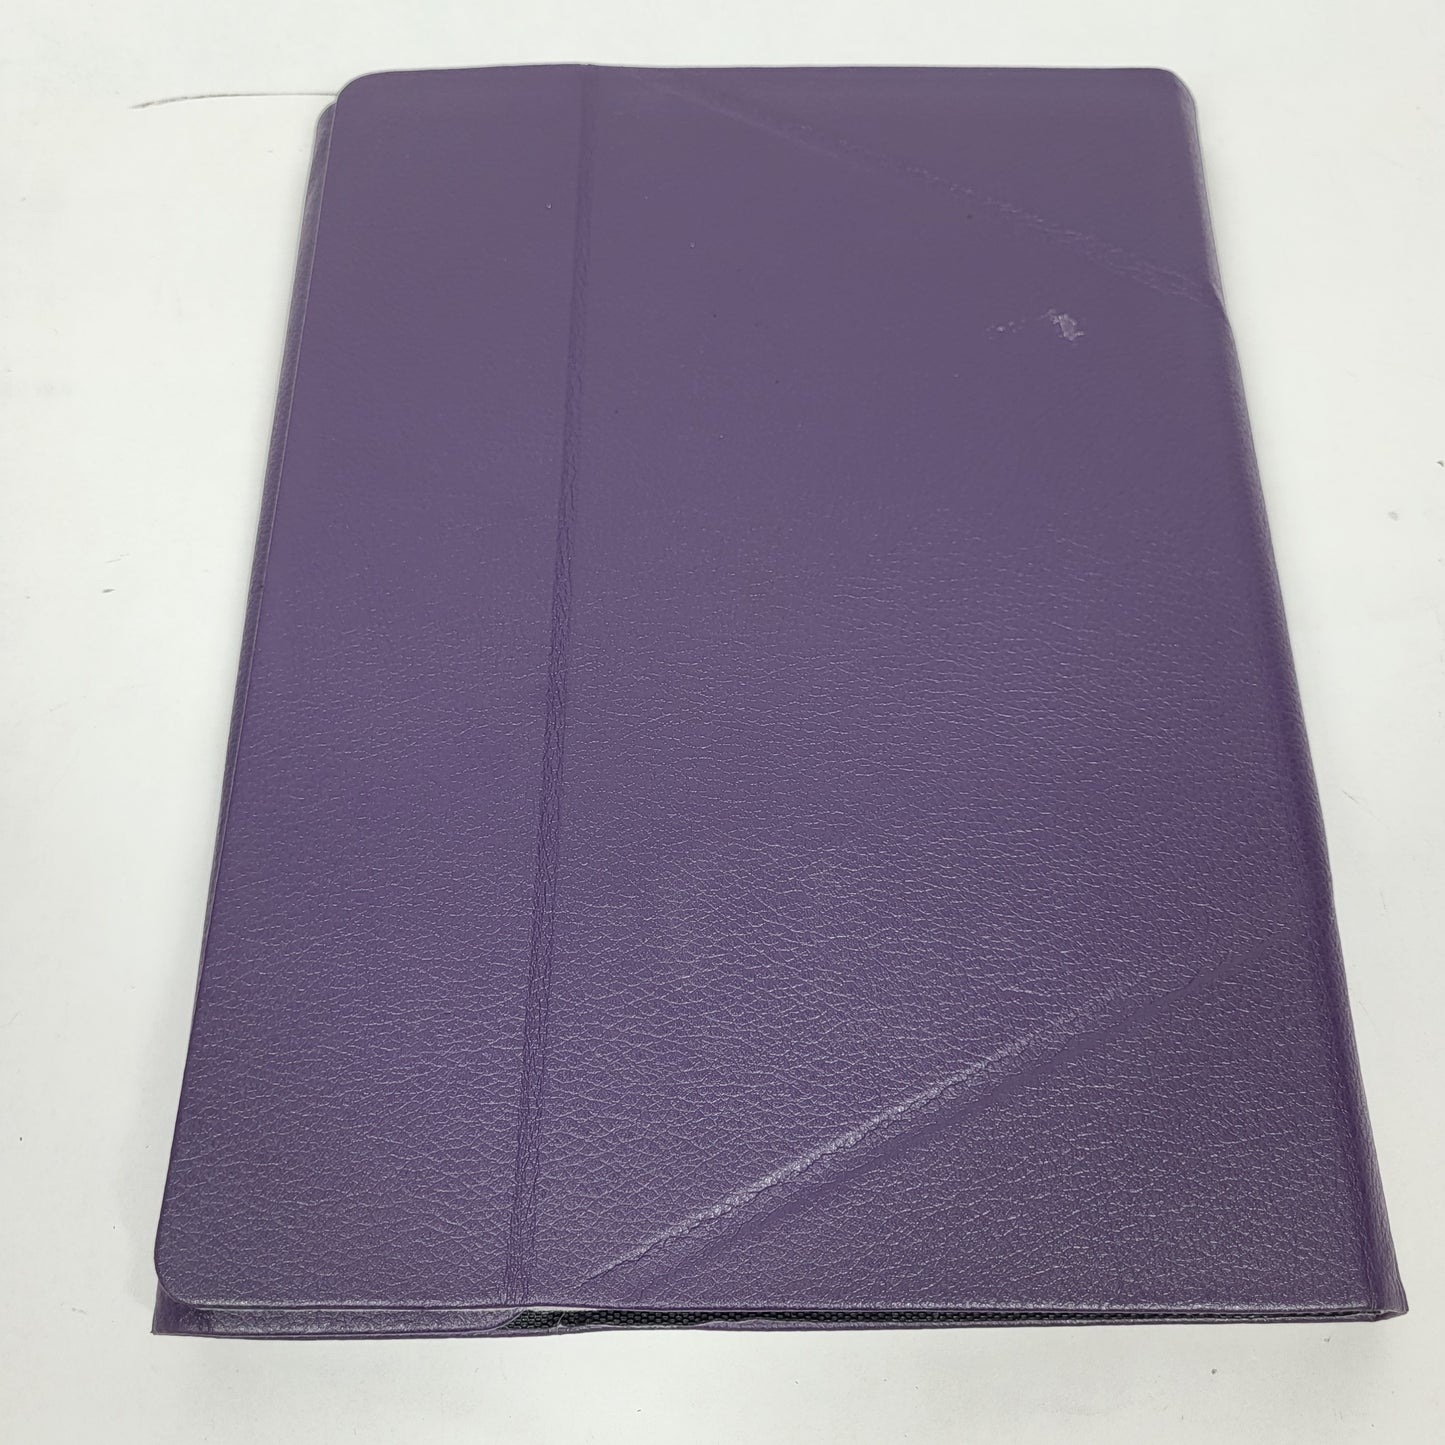 WiFi Only Samsung Galaxy Tab S6 10.5" 128GB Purple SM-T860